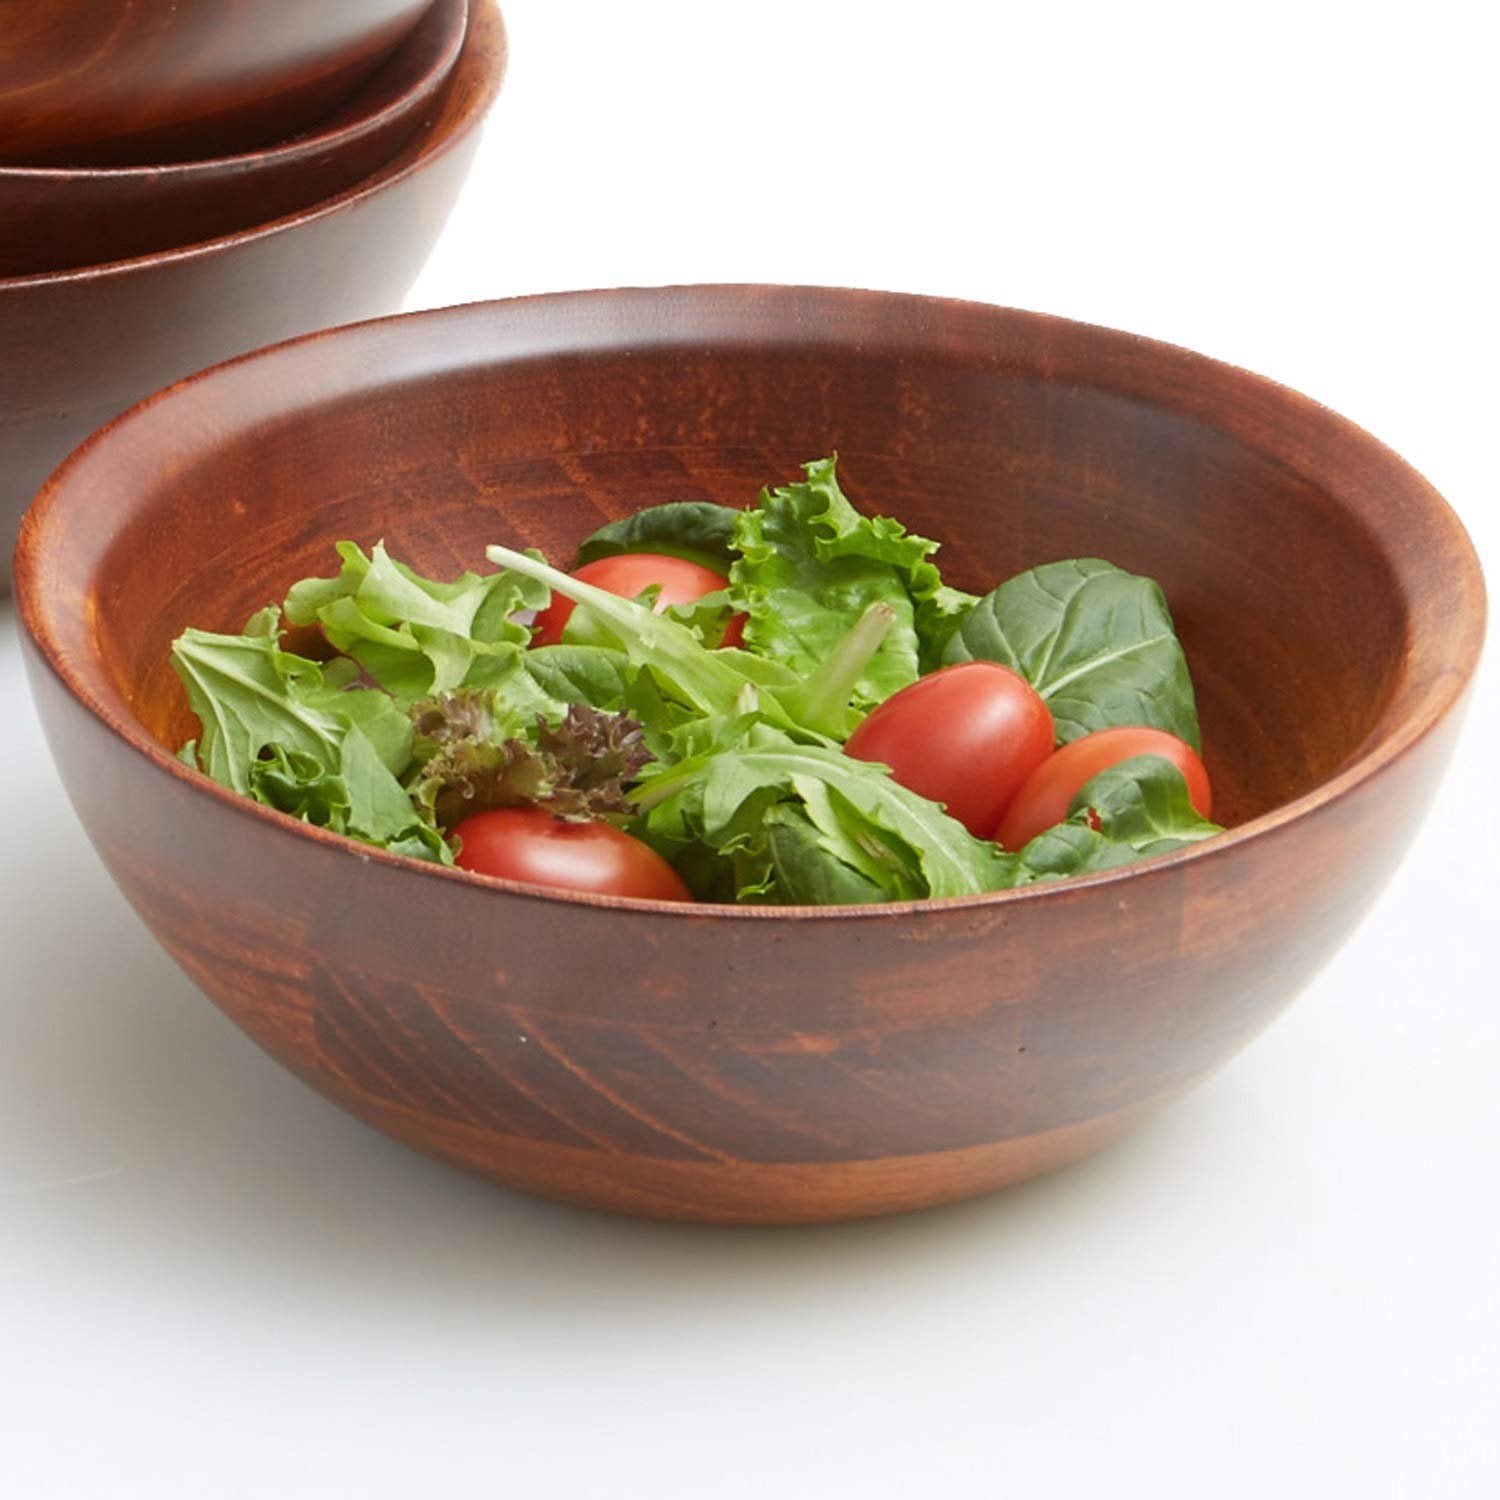 Woodard & Charles Wood Individual Salad Bowl, 7" x 2.5", Cherry